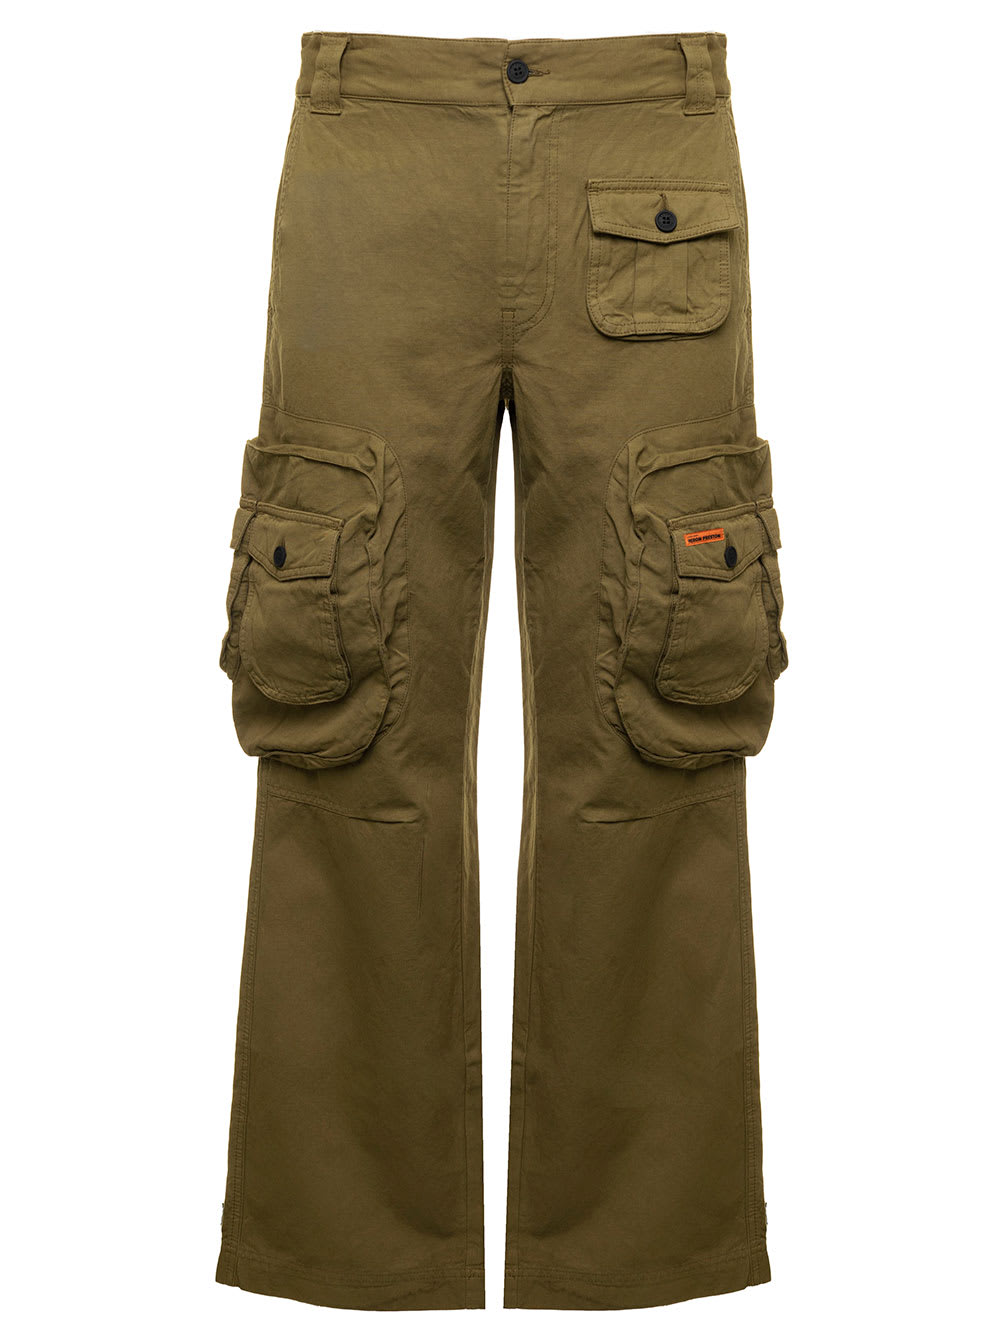 HERON PRESTON Pockets Cargo Pants Military Green No Co